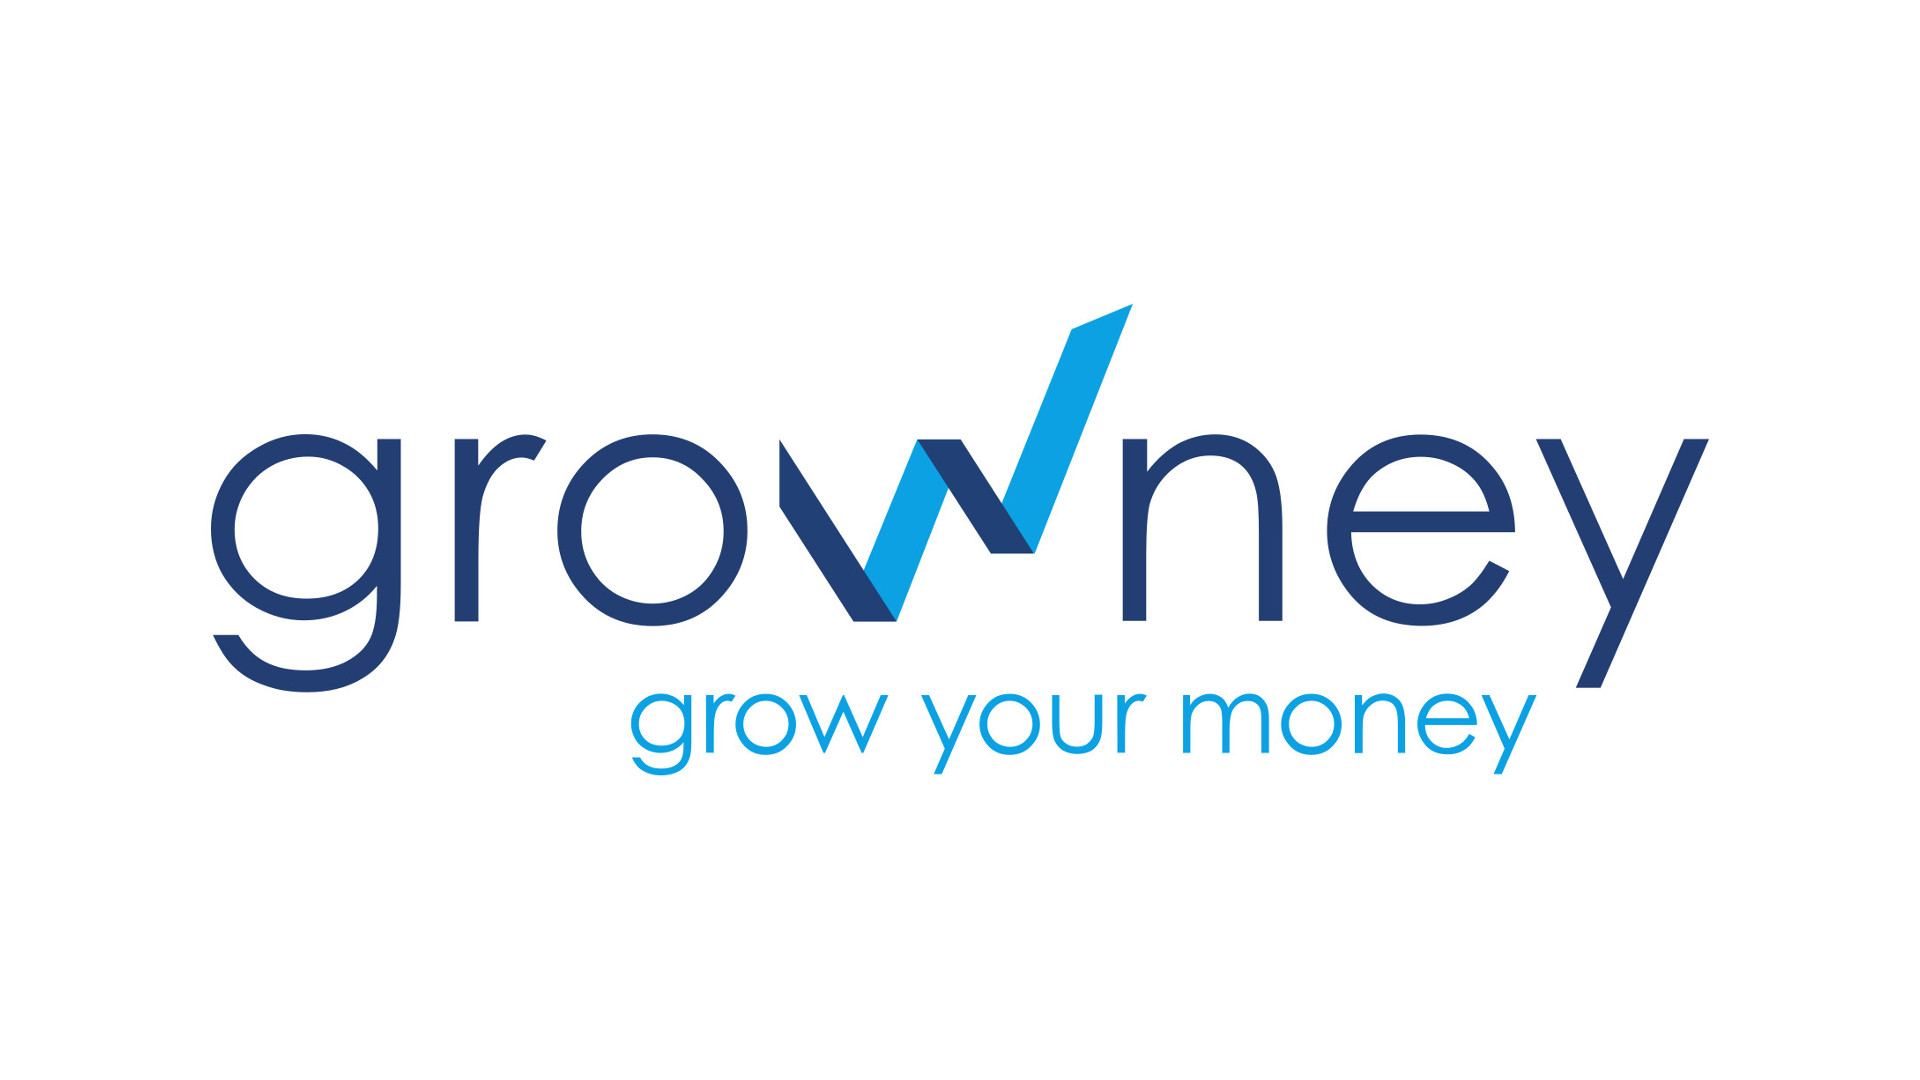 Growney grow your money